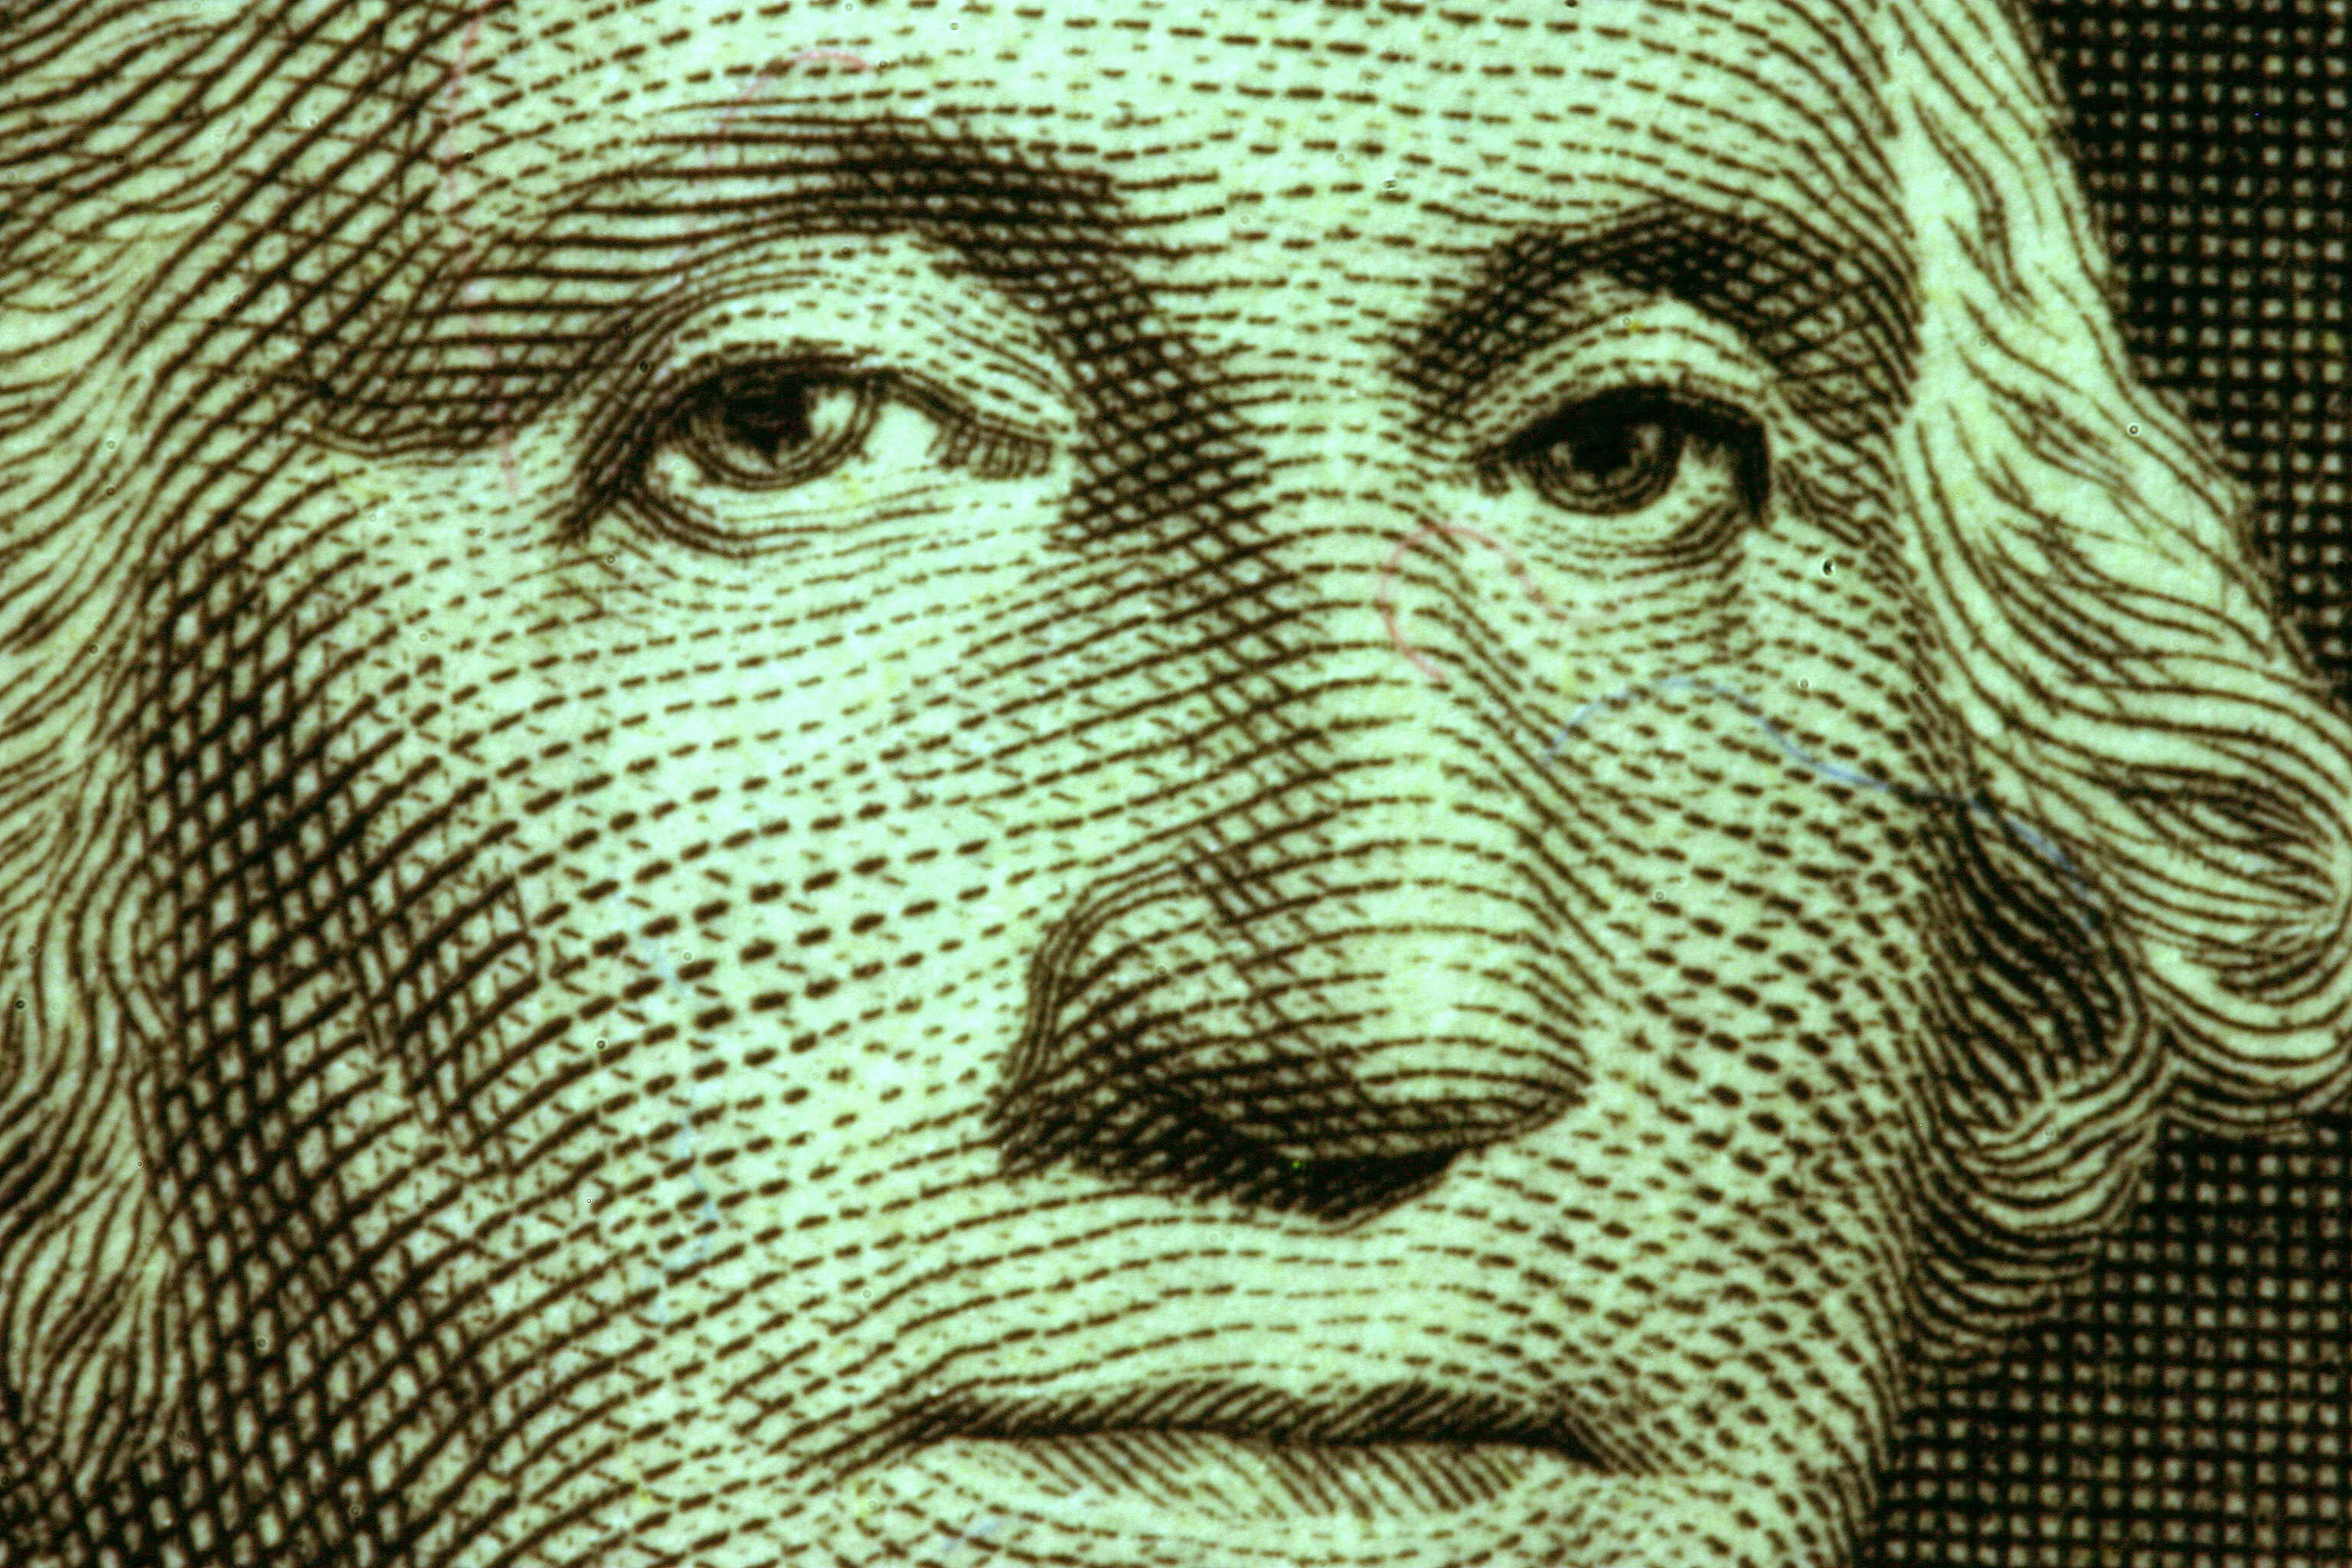 Revealed Secrets of the Dollar Bill